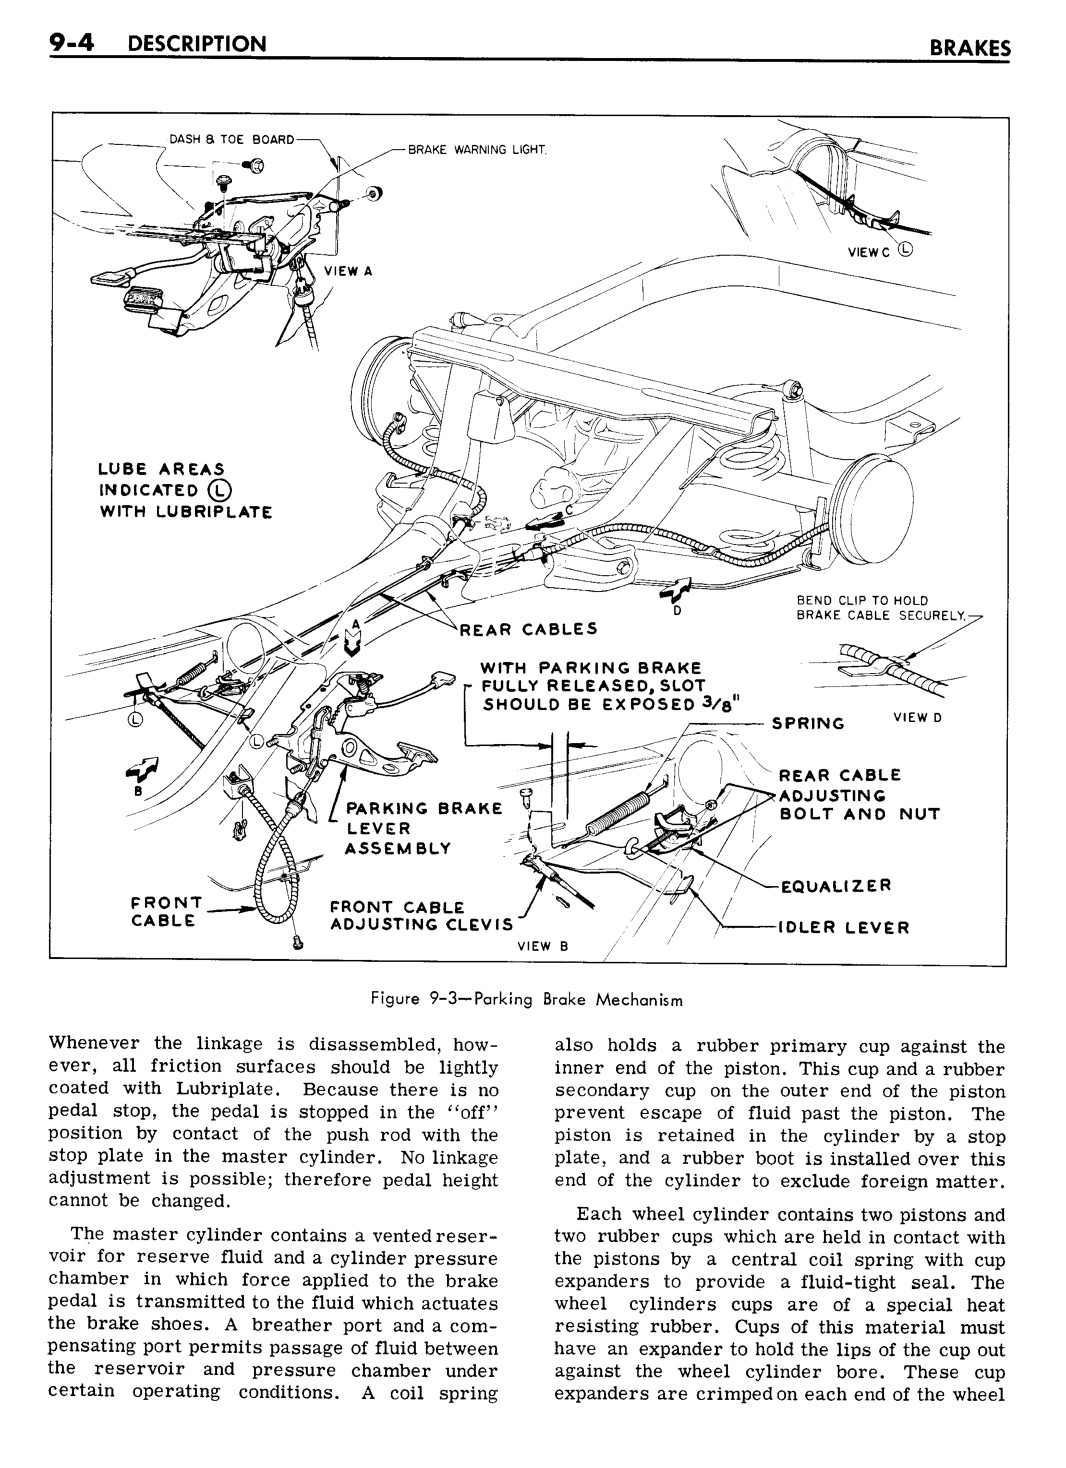 n_09 1961 Buick Shop Manual - Brakes-004-004.jpg